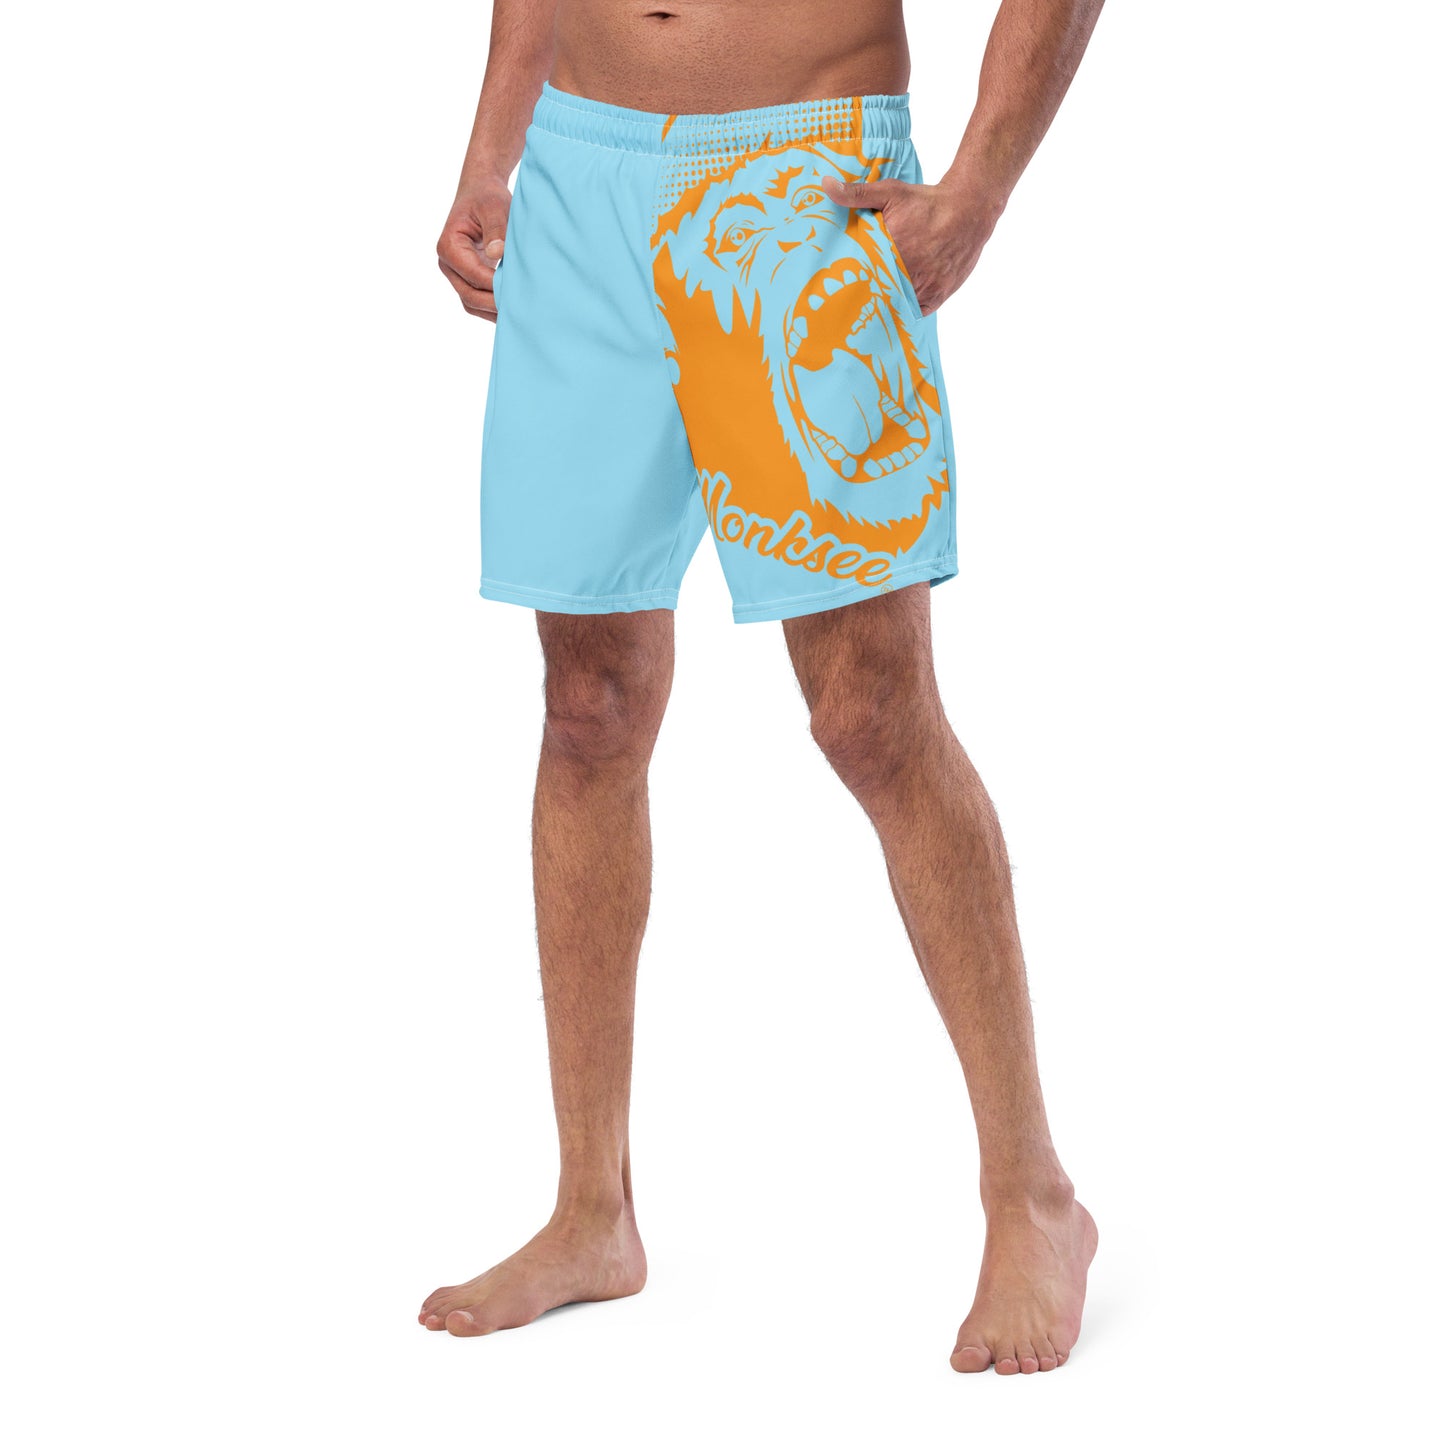 Monksee Face - Men's Coral Swim Trunks